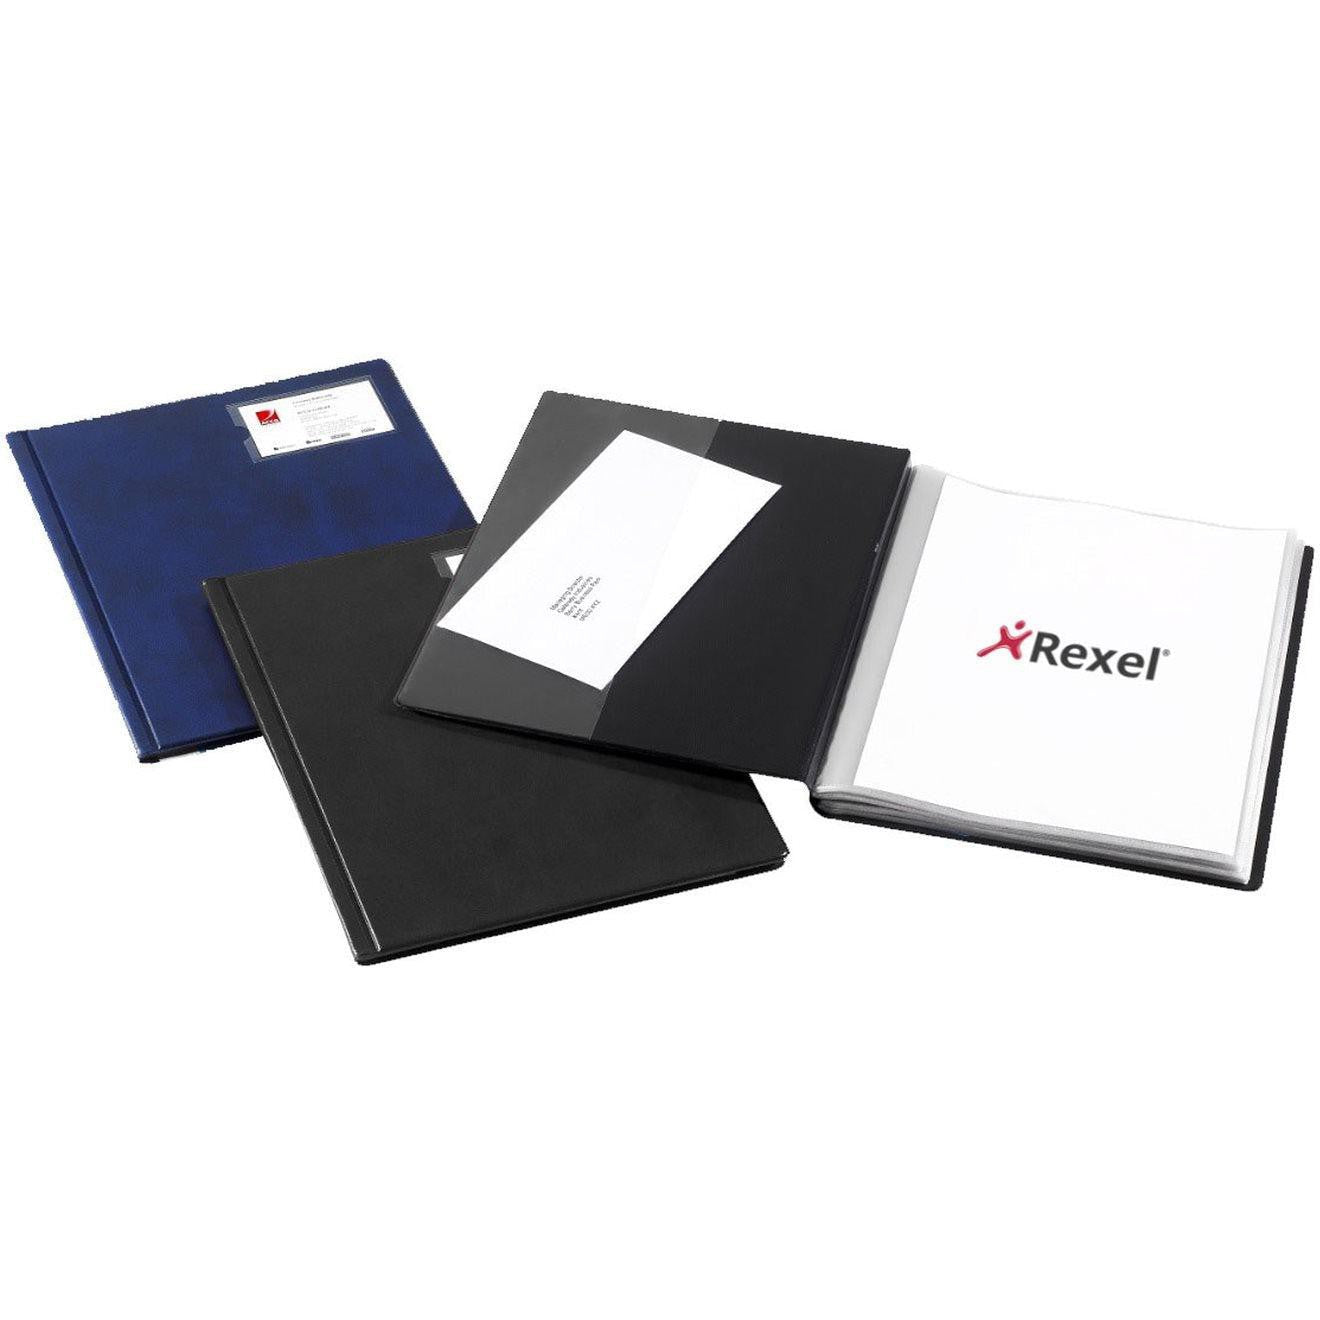 Rexel Nyrex Slimview Display Book 10015-Filiing Accessories-Rexel-Star Light Kuwait